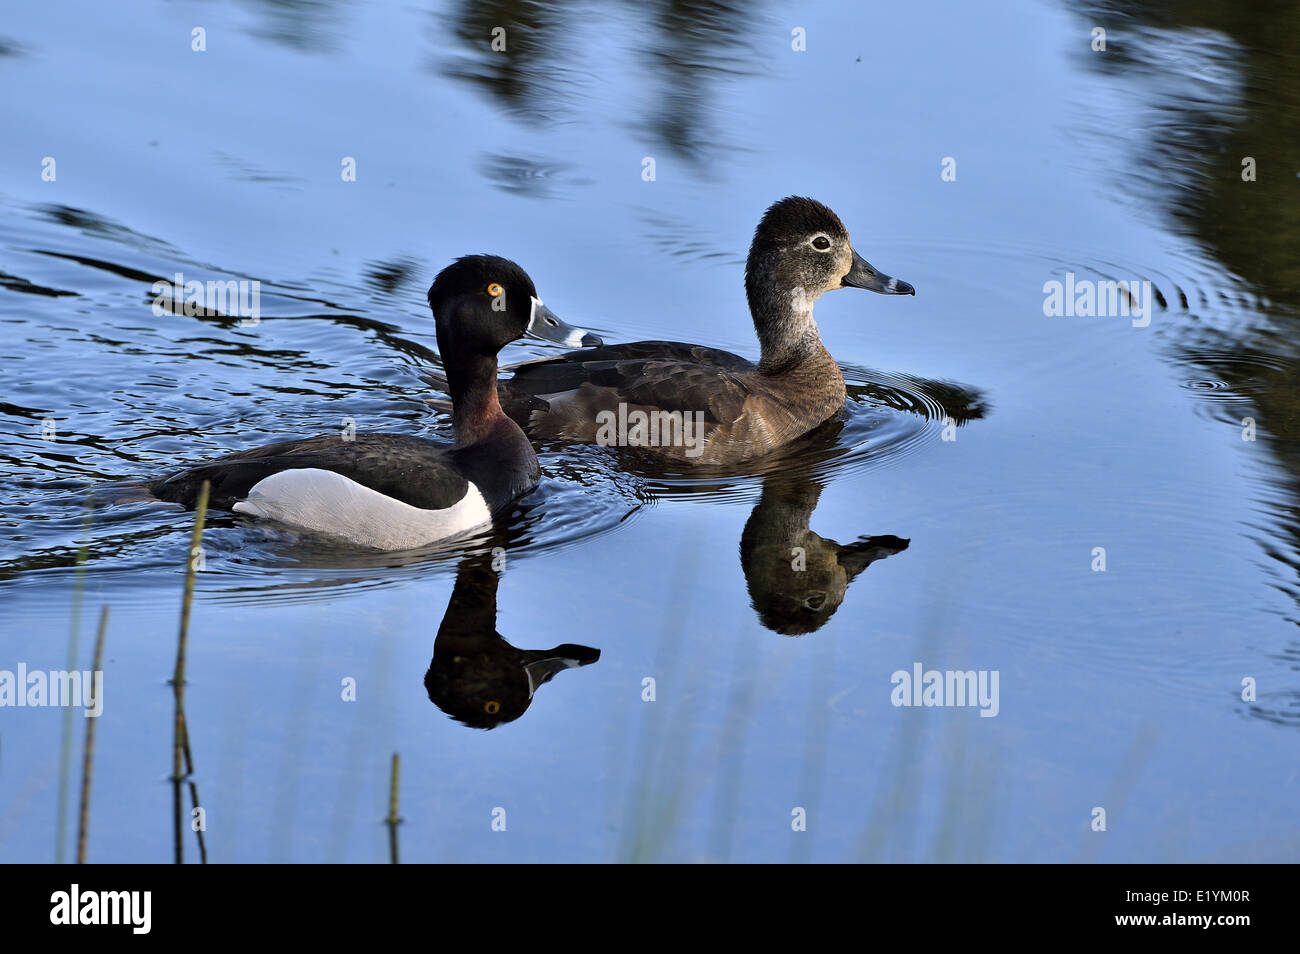 21 Species Of Ducks In Oklahoma (ID, Calls, Season Guide)